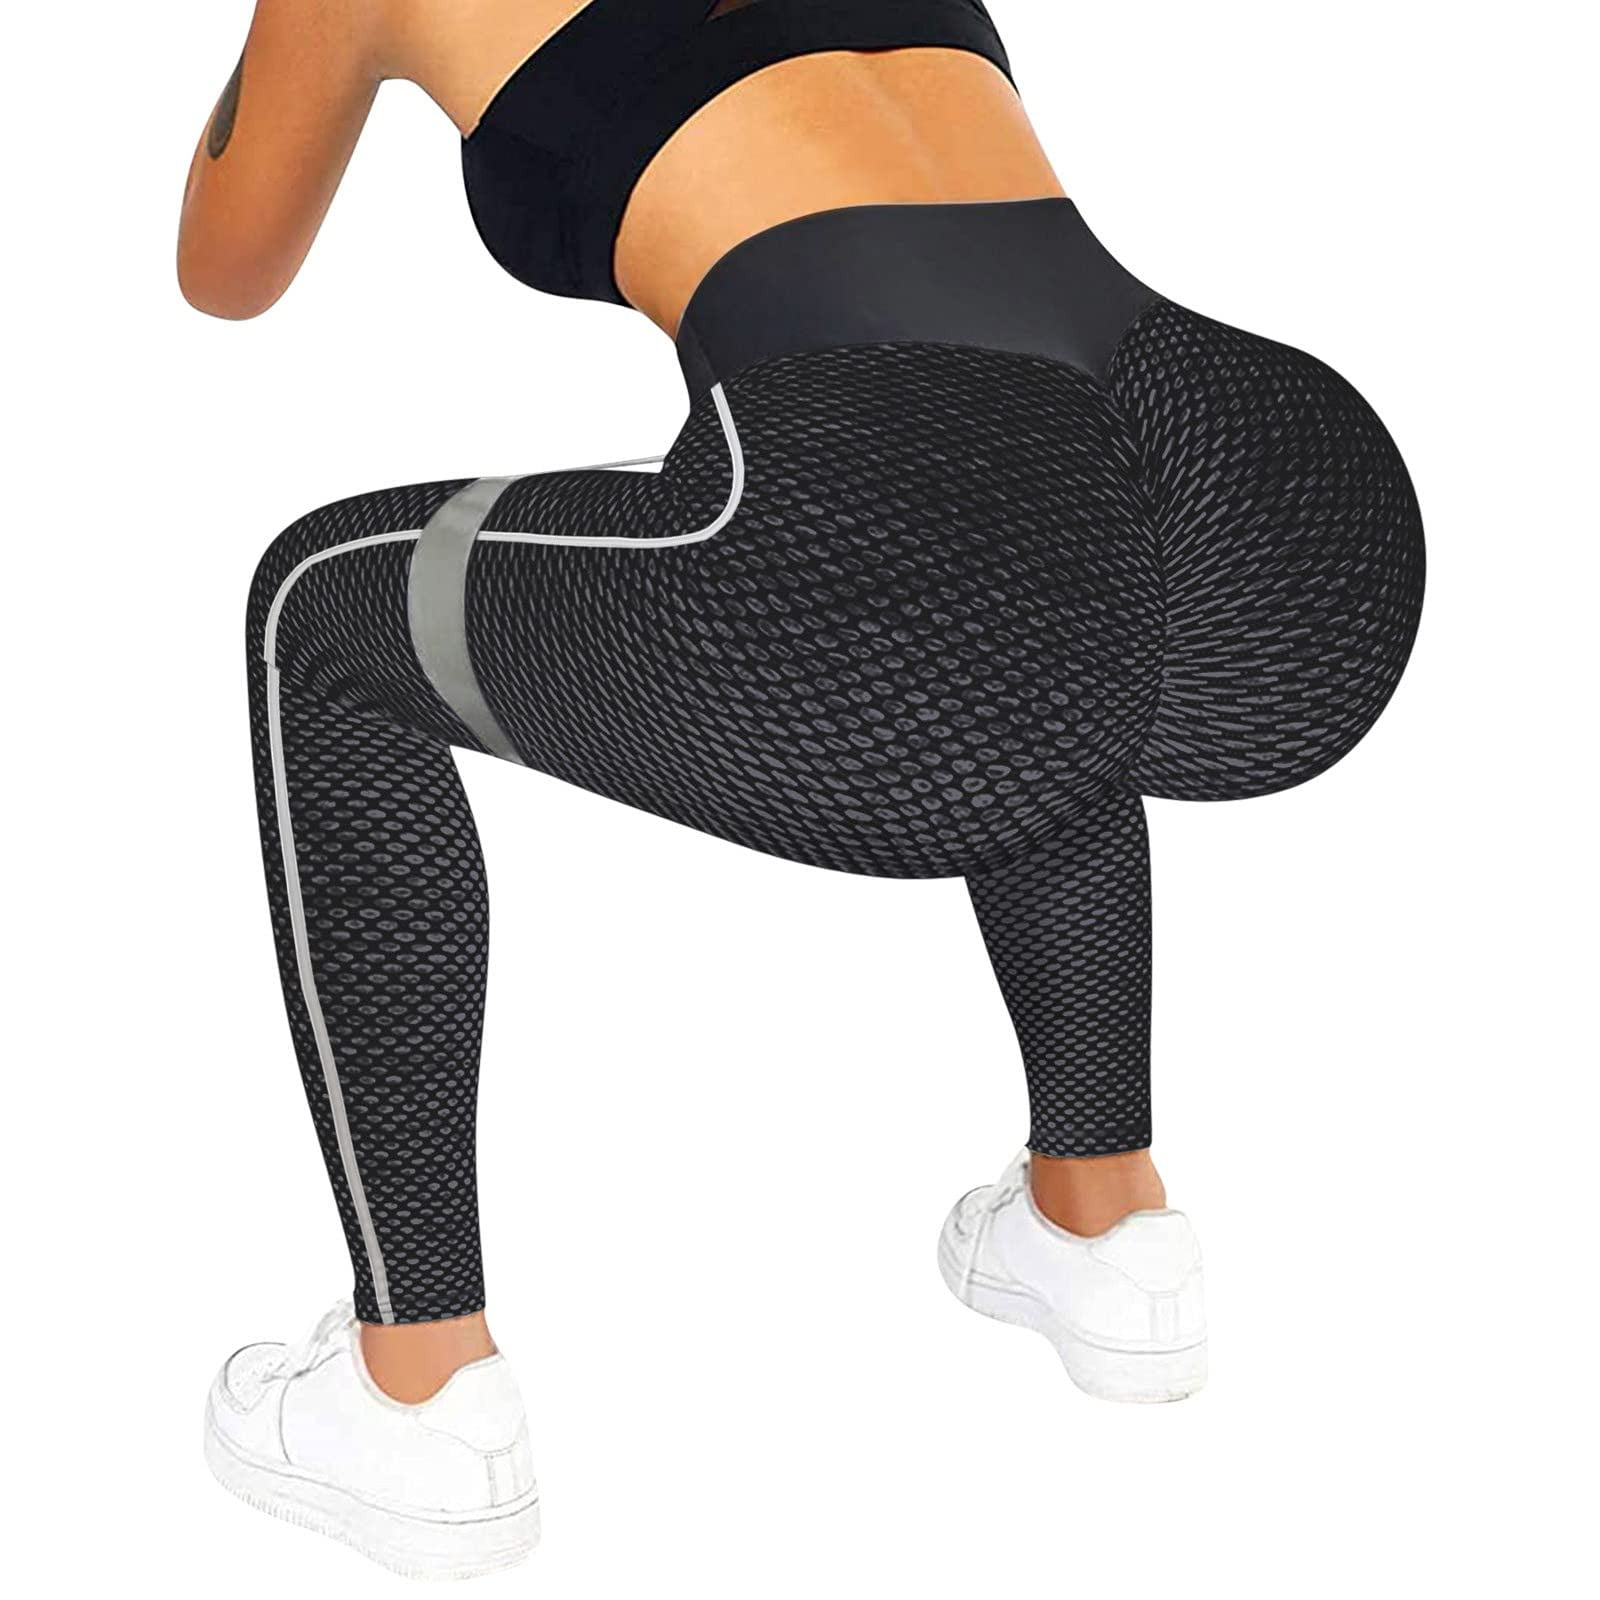  Kcocoo Butt Lifting Workout Joggers for Women, Scrunch